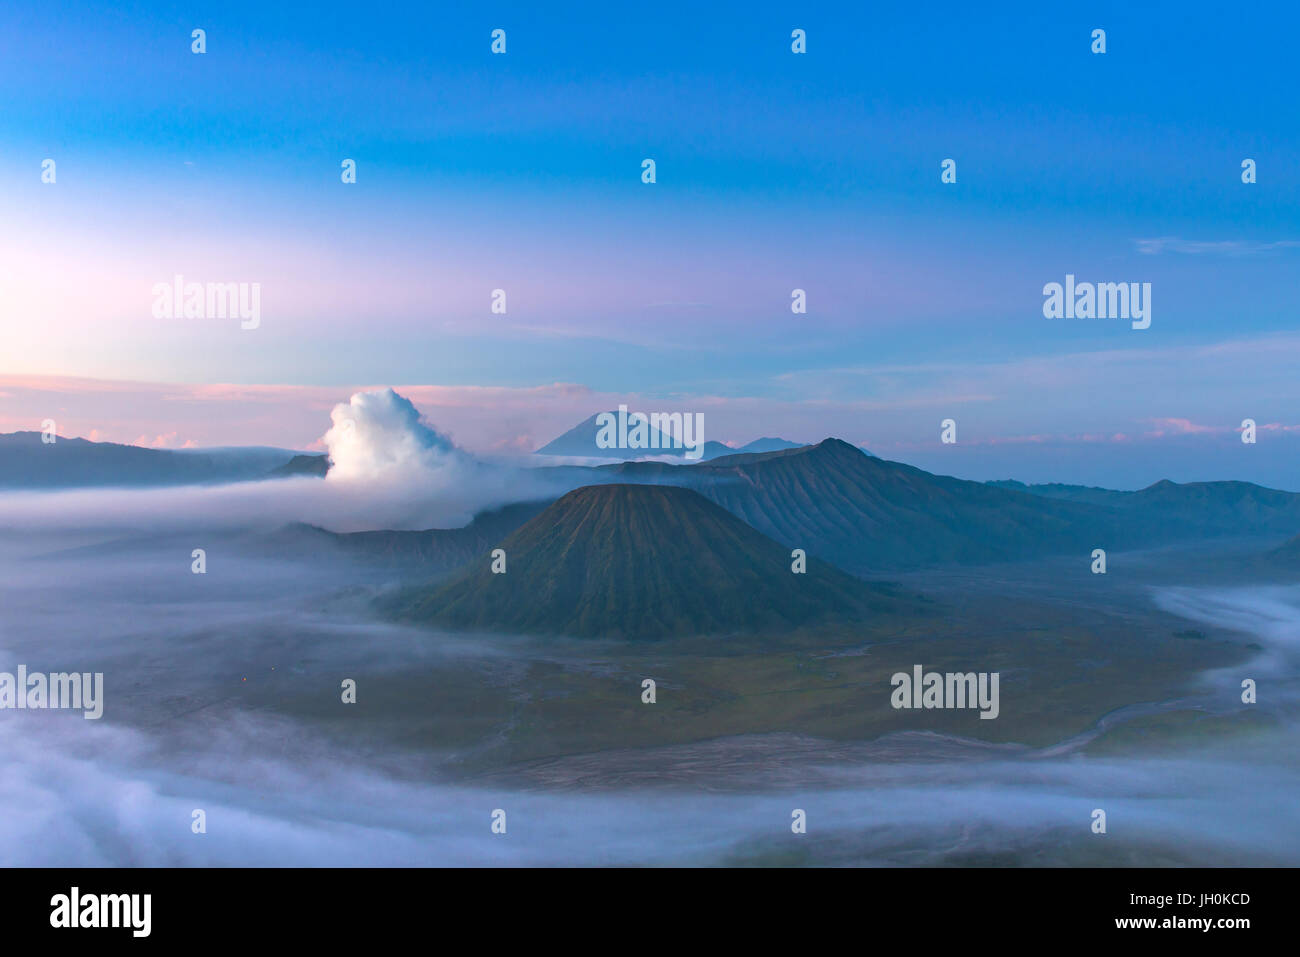 Il monte vulcano Bromo (Gunung Bromo) in bromo Tengger Semeru National Park, Java Orientale, Indonesia. Foto Stock